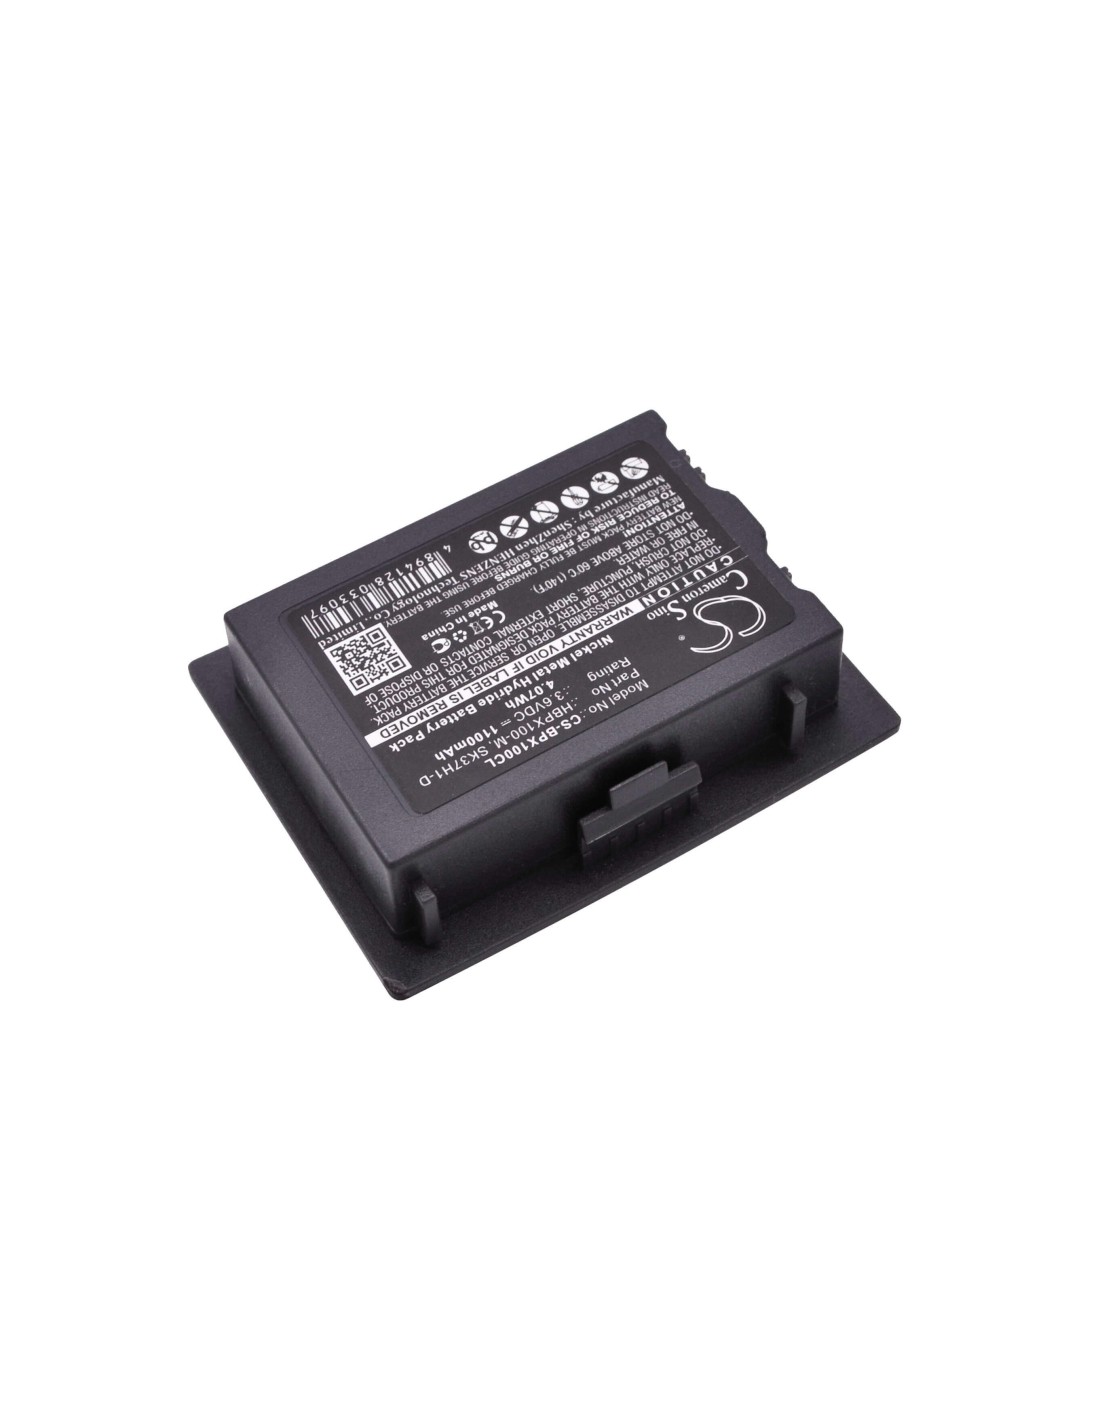 Battery for Alcatel, Iptouch 600, Mobile Iptouch 3.6V, 1100mAh - 3.96Wh